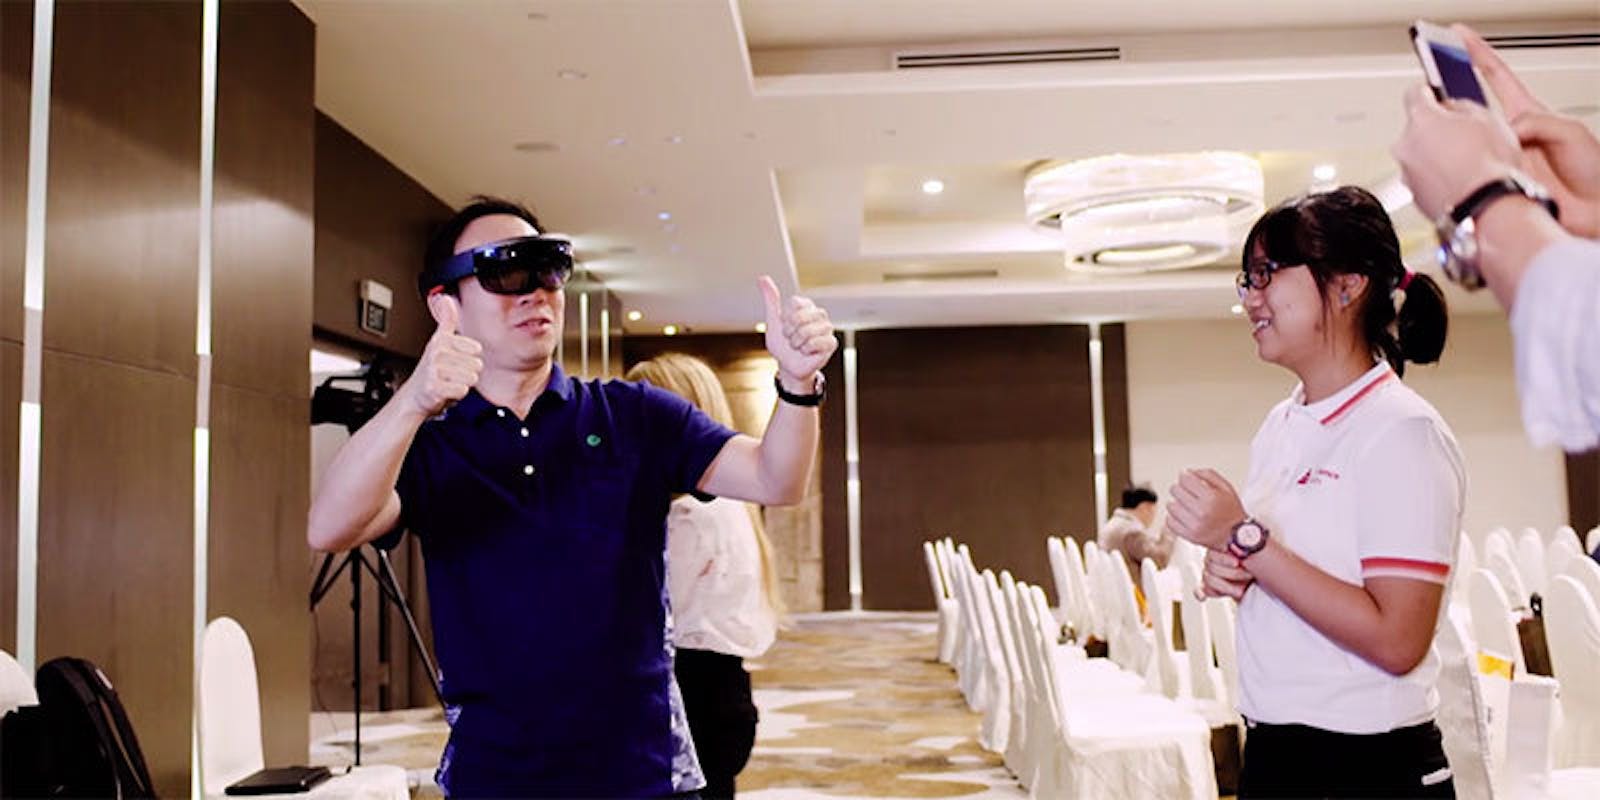 VR masterclass in Singapore